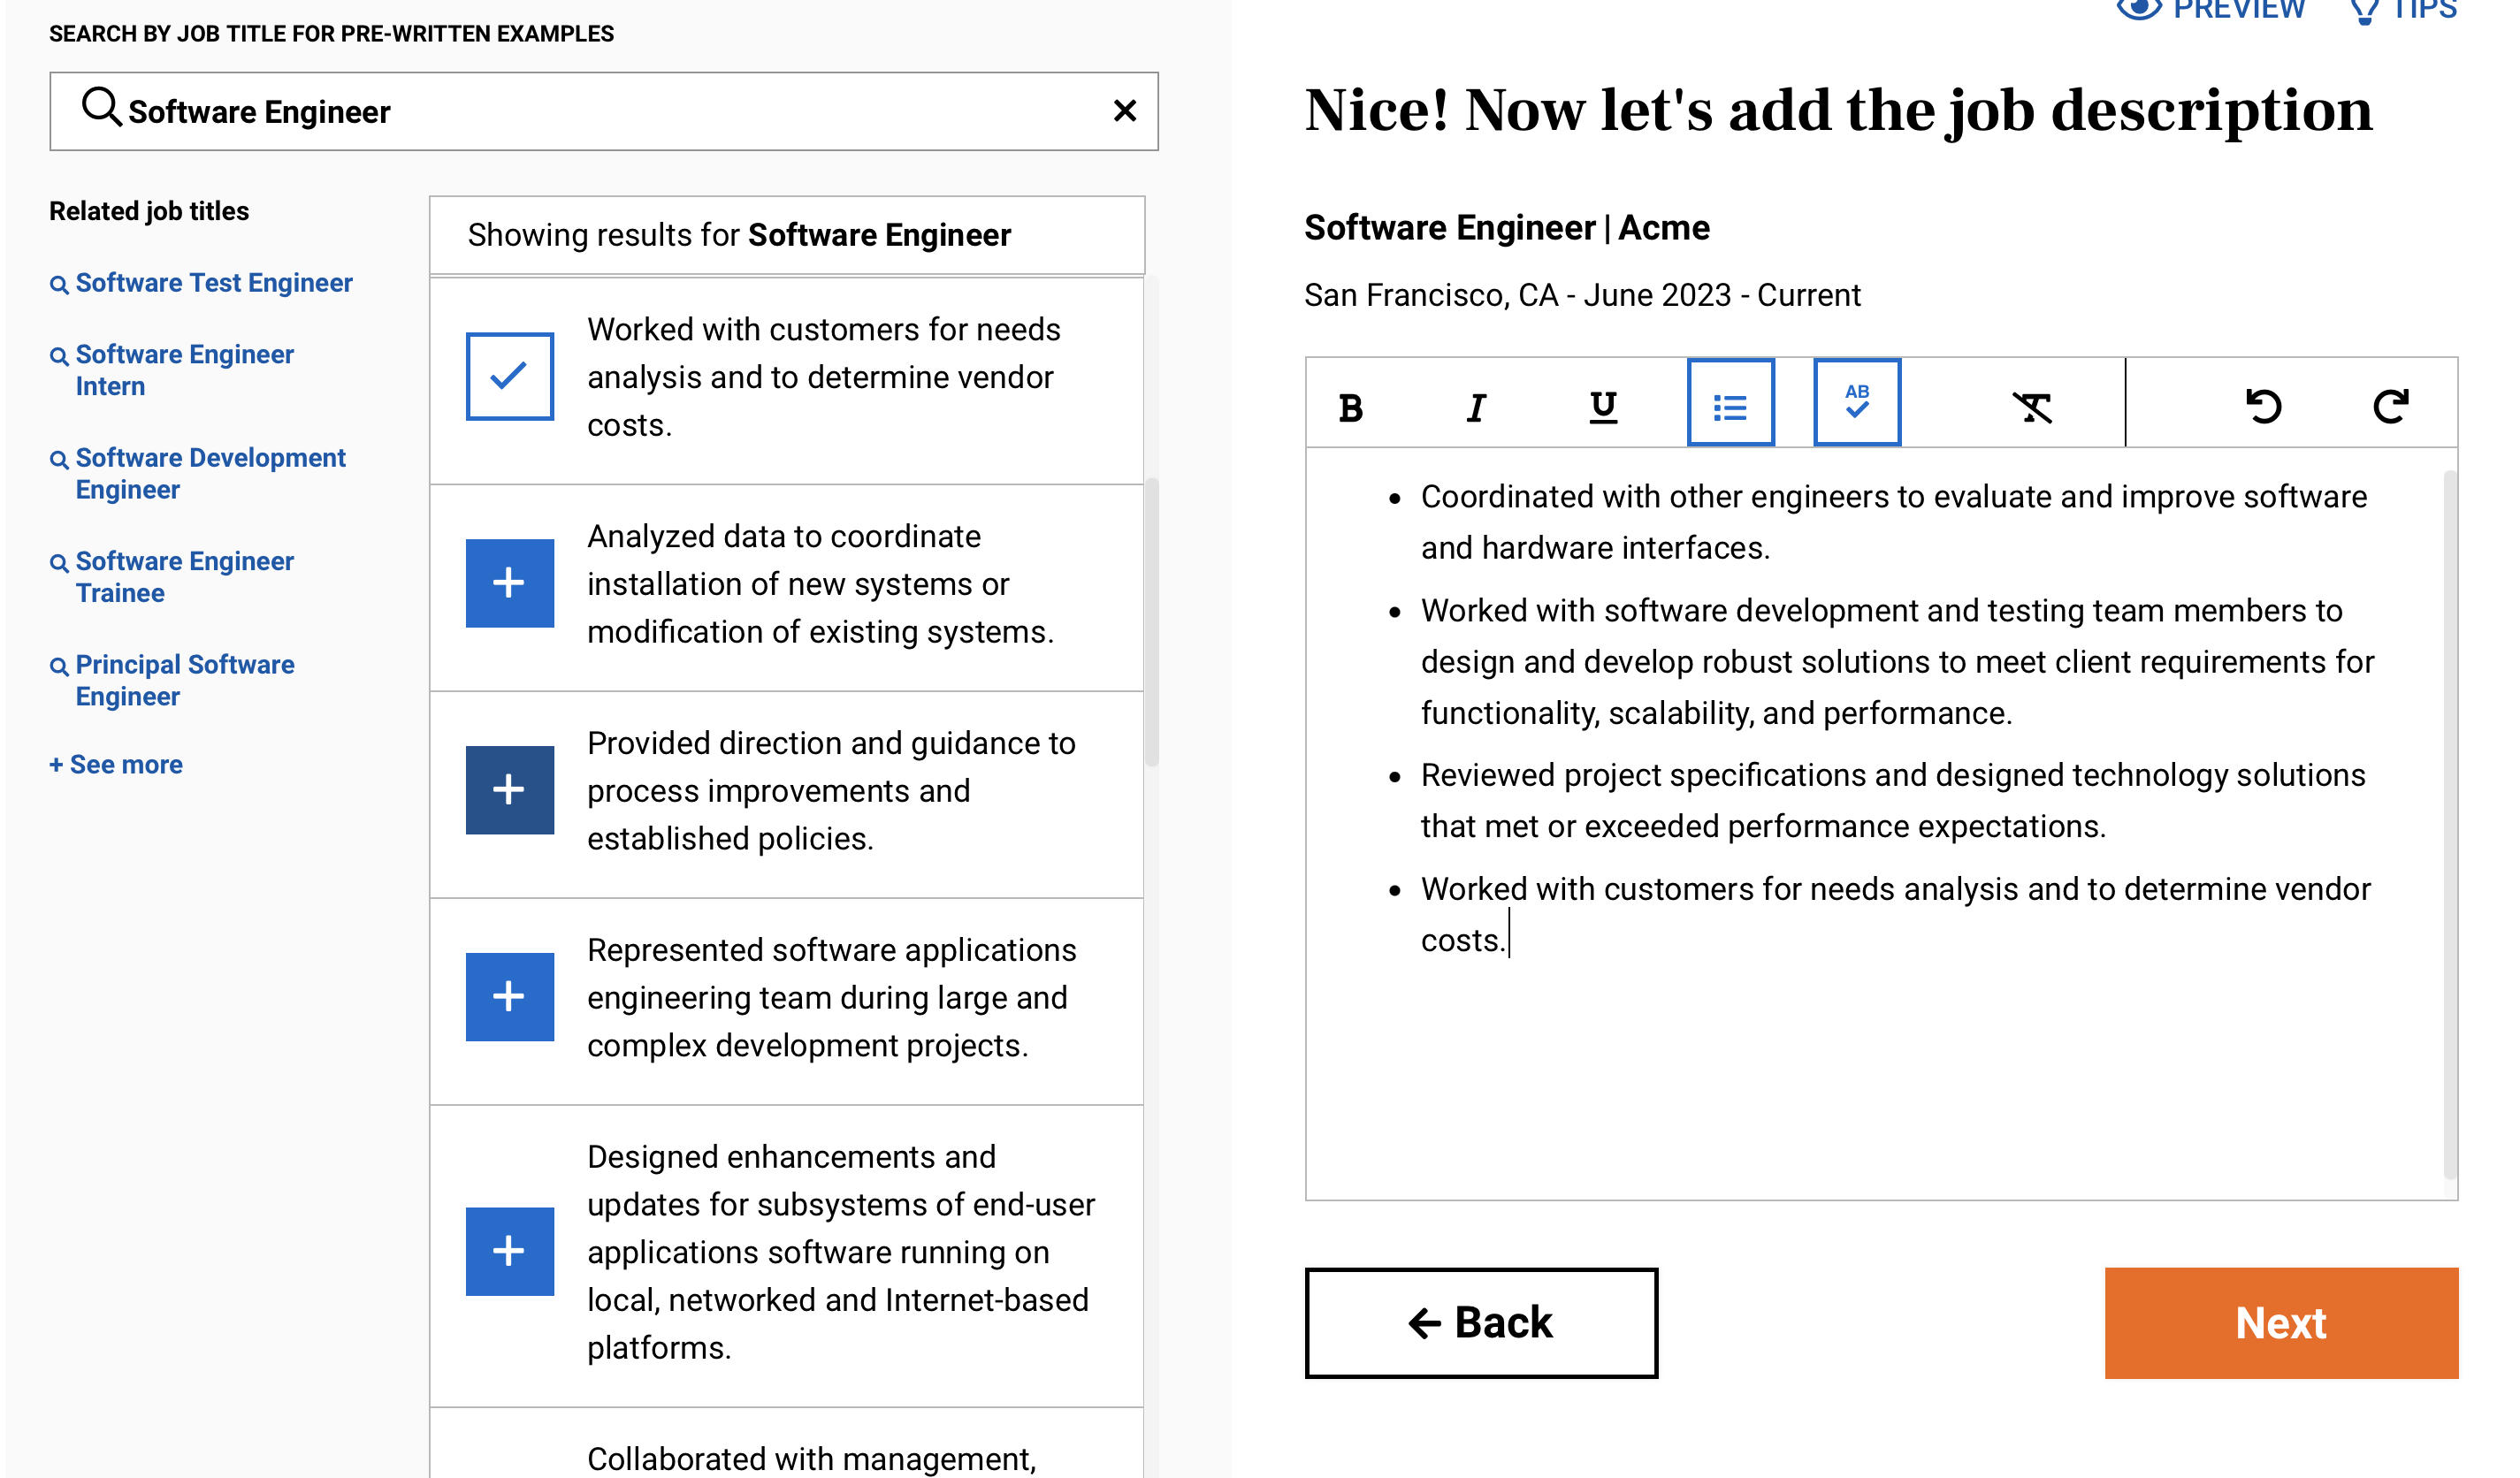 Screenshot of LiveCareer's job description database interface, showcasing various tech roles and their specific job duties